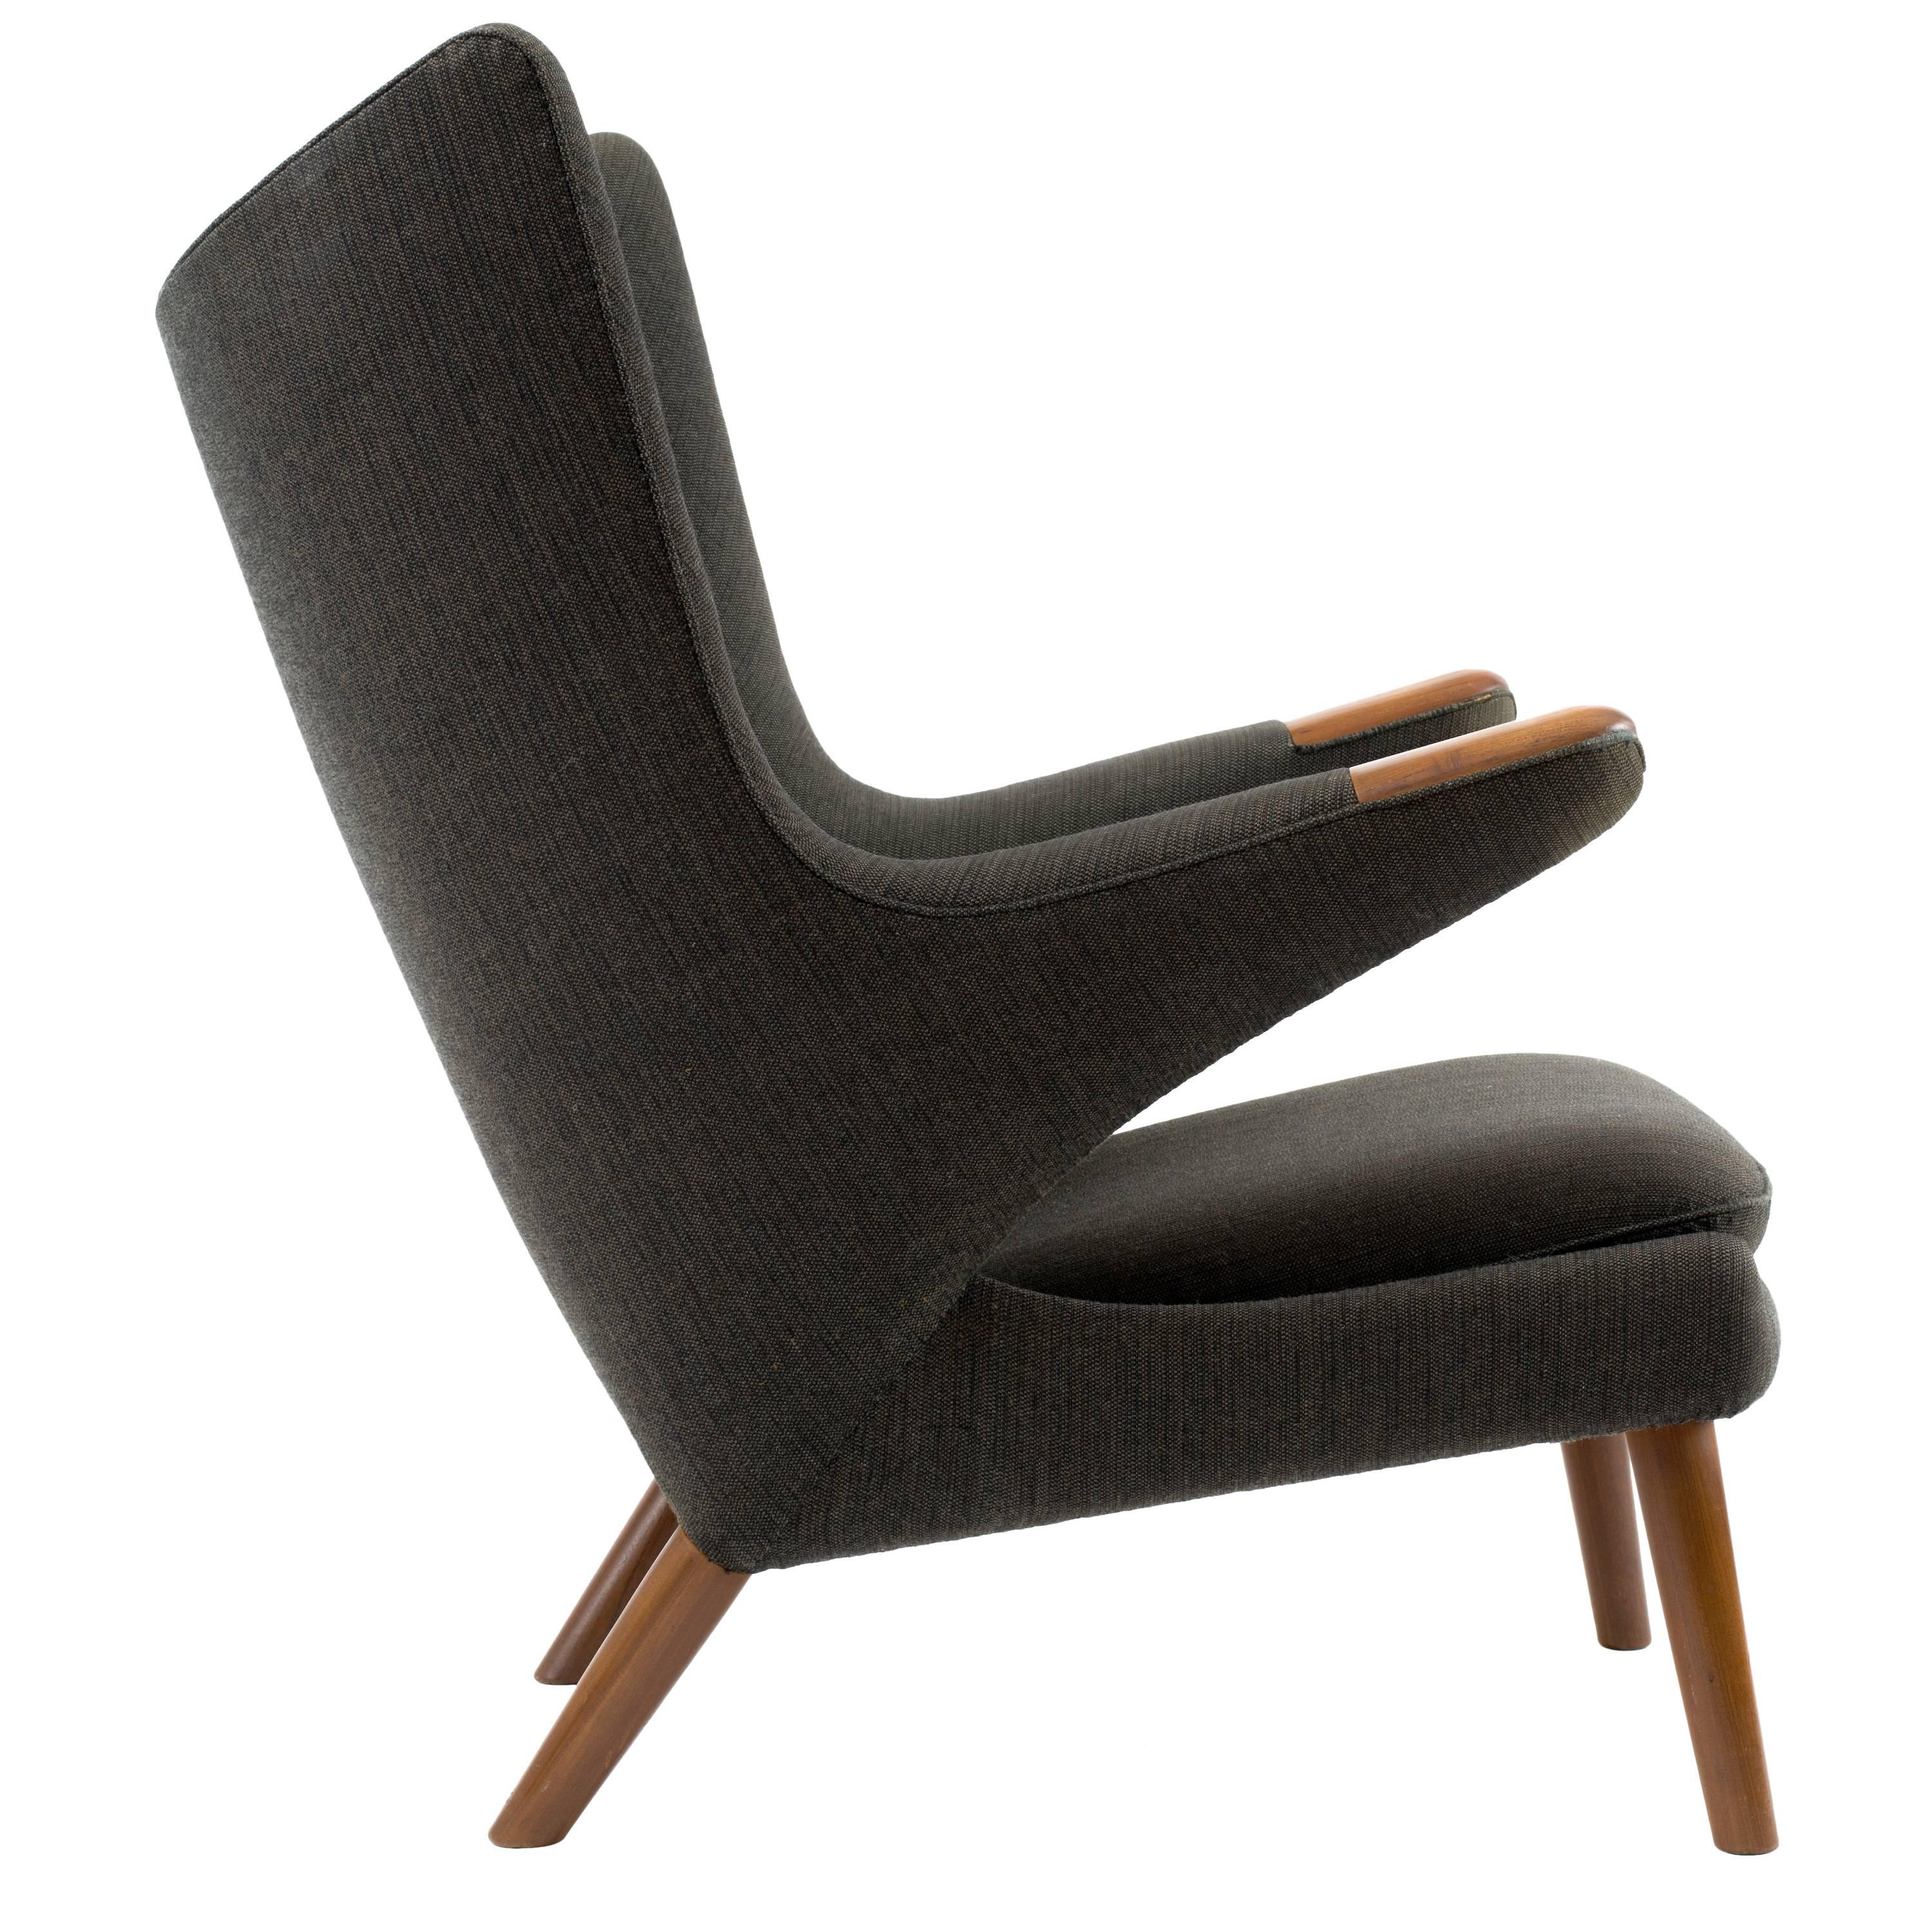 Hans J Wegner Papa Bear Chair in Original Charcoal Gray Wool Upholstery